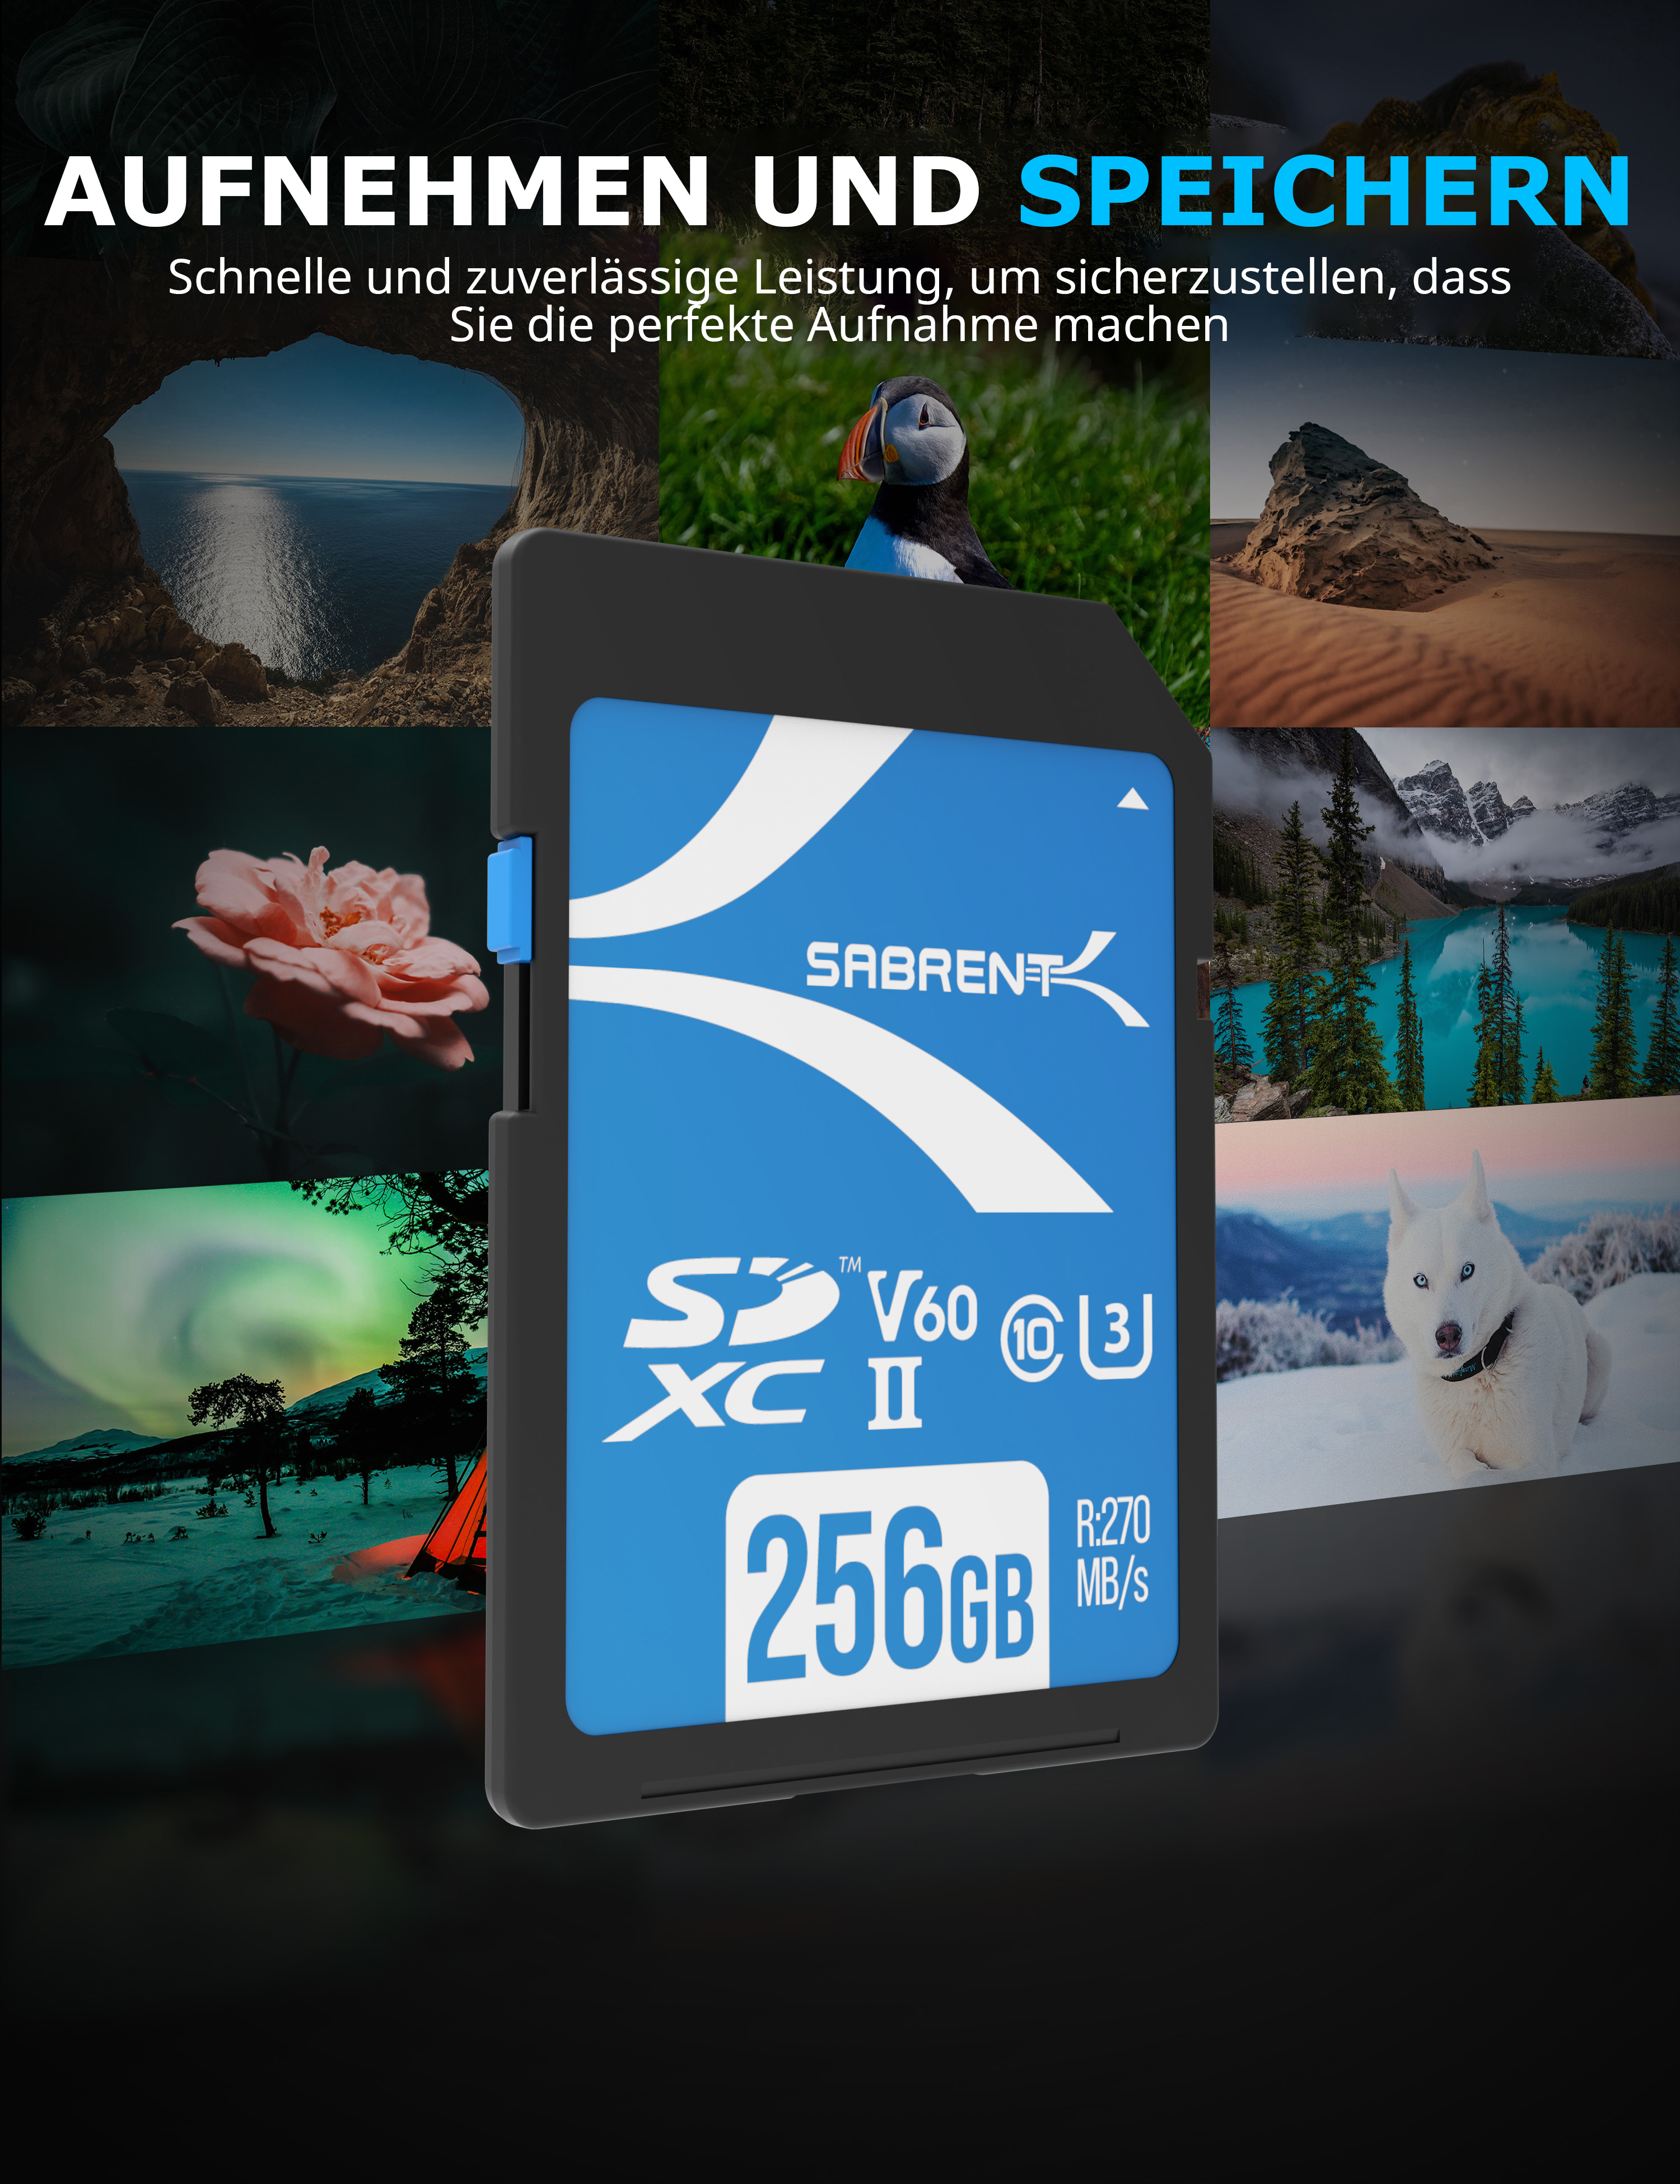 SABRENT V60 GB, 256GB UHS-II, 256 SDXC SD SD MB/s Karte, 270